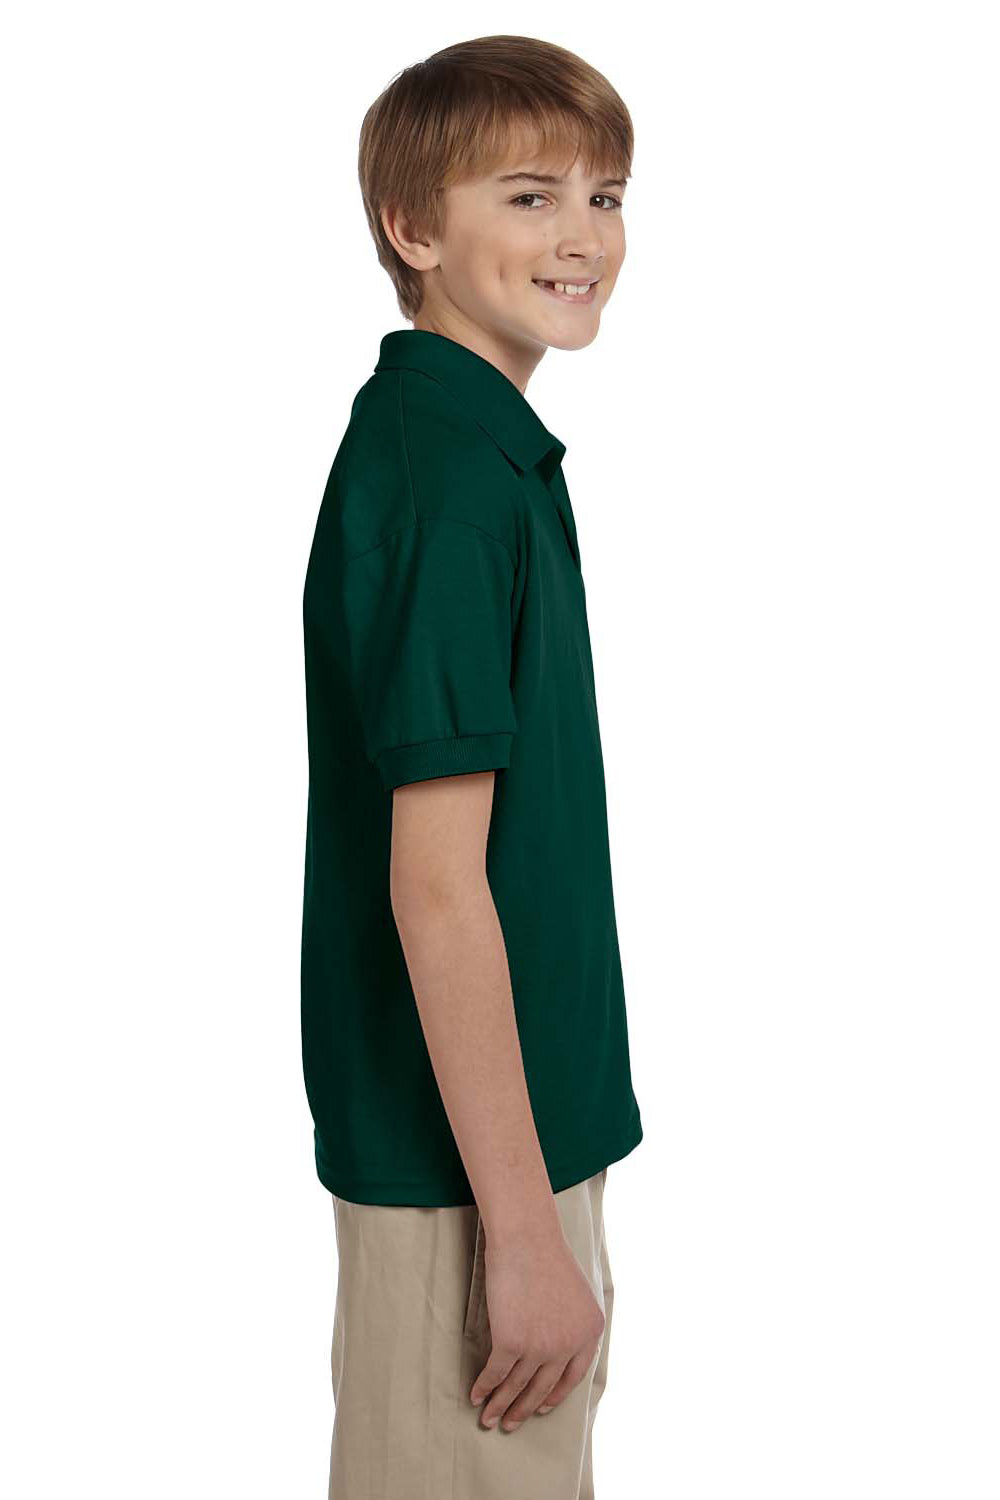 Gildan G880B Youth DryBlend Moisture Wicking Short Sleeve Polo Shirt Forest Green Side